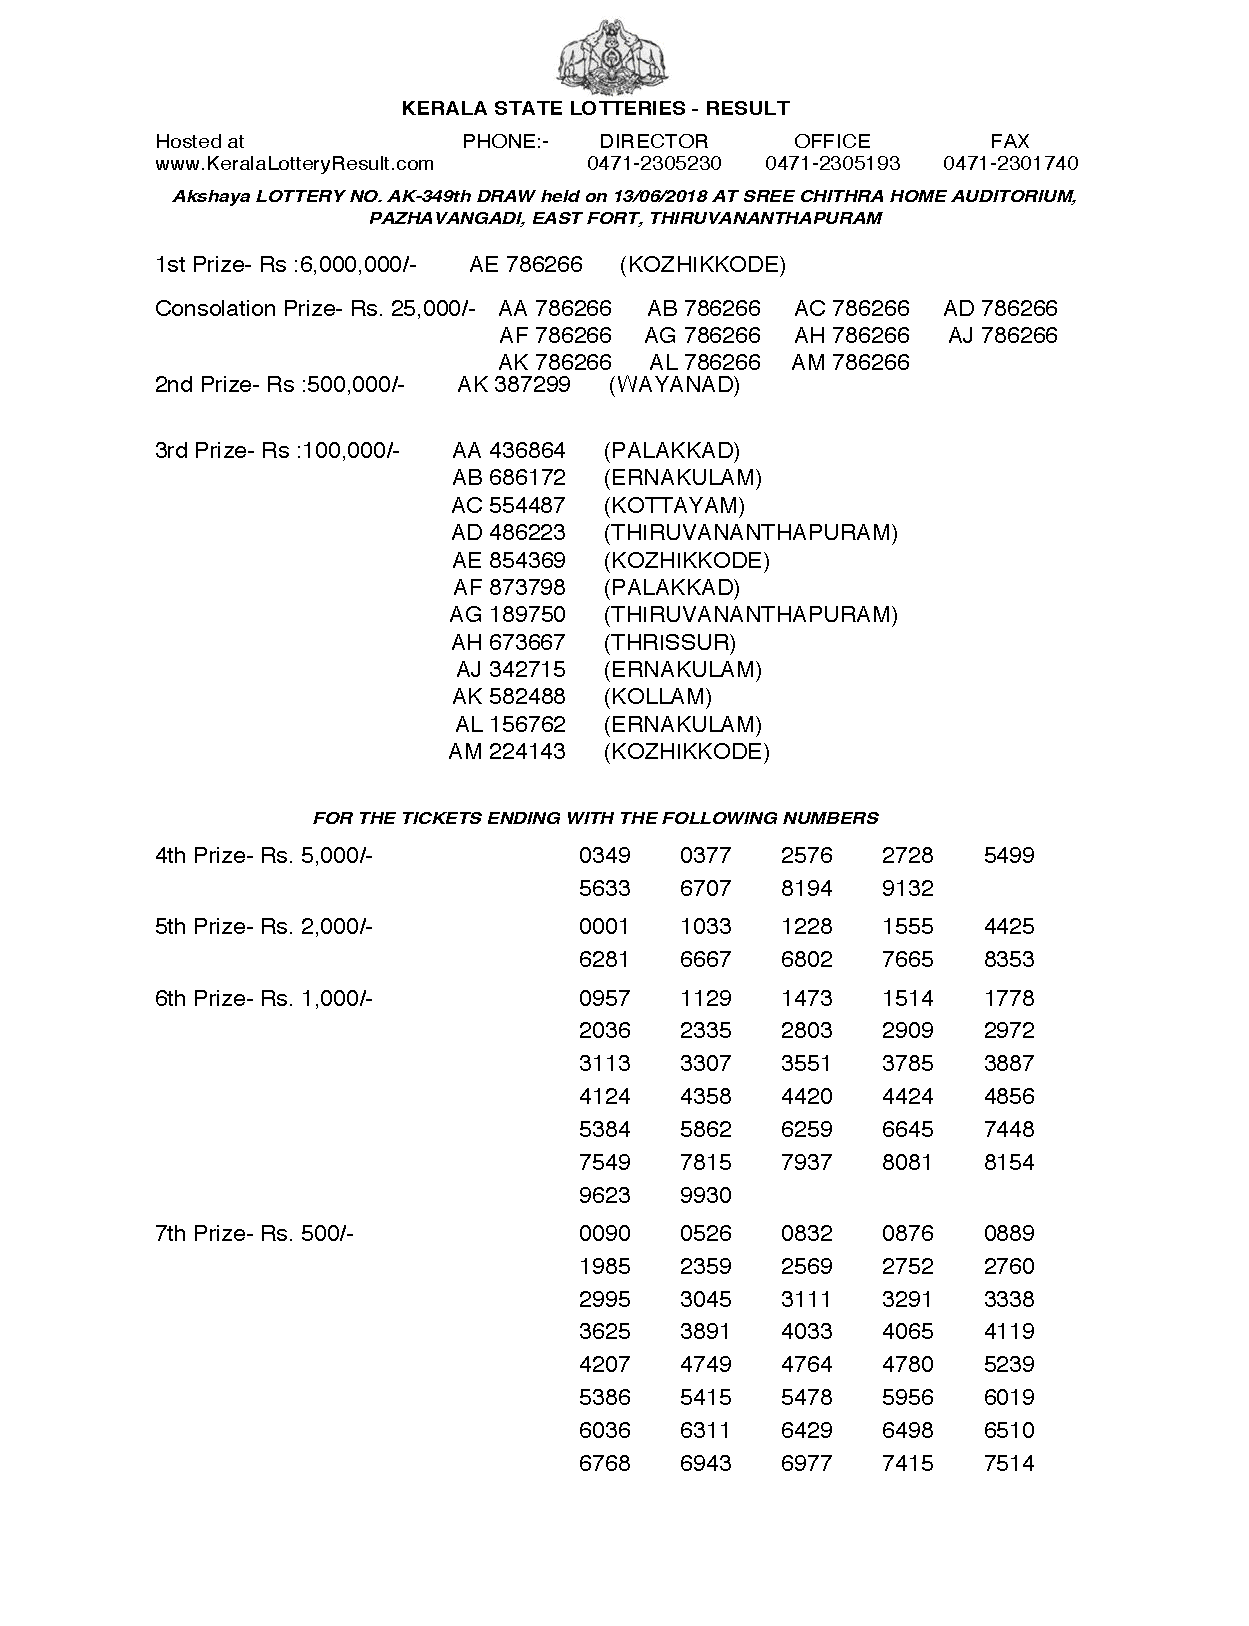 Akshaya AK349 Kerala Lottery Results Screenshot: Page 1